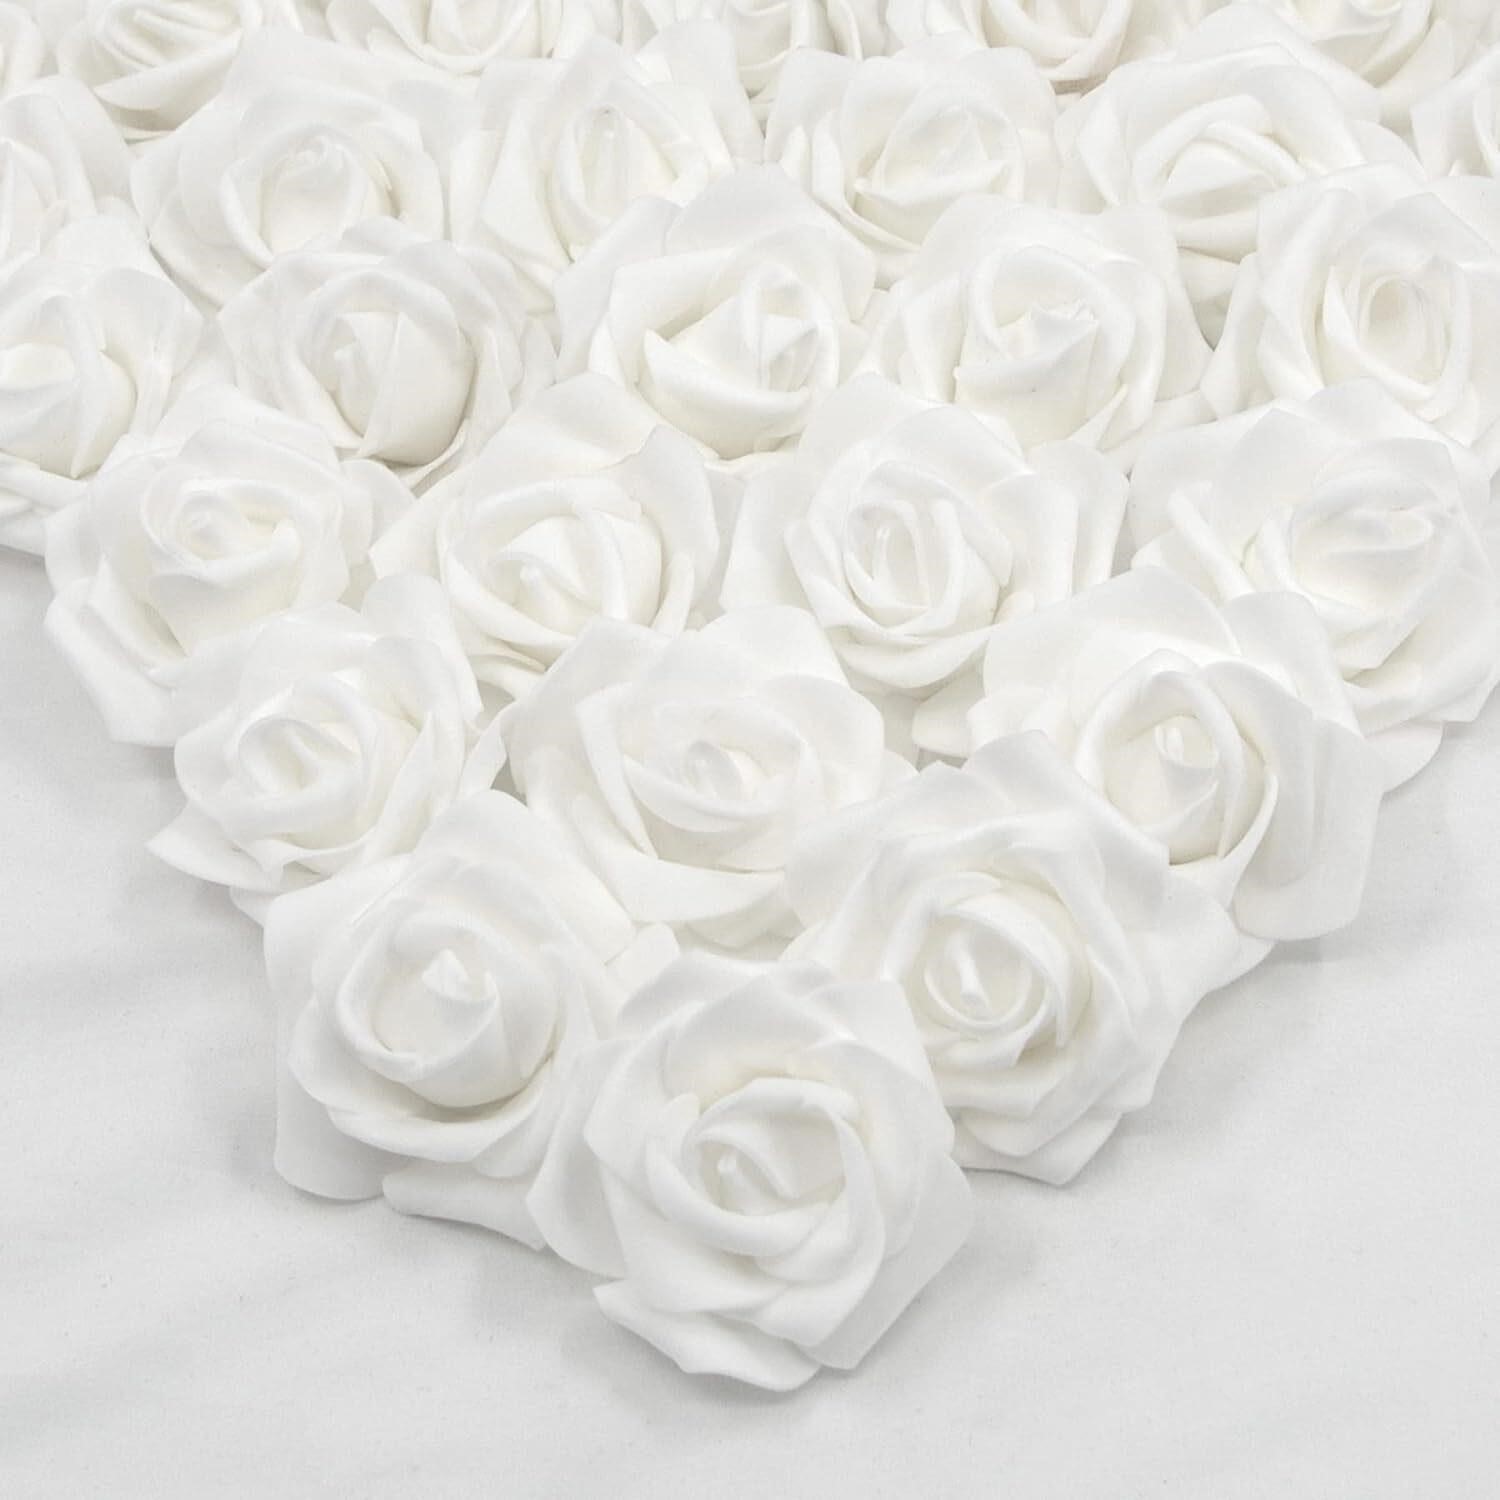 AUSTOR 200 Pcs Foam Rose Heads Artificial Flowers